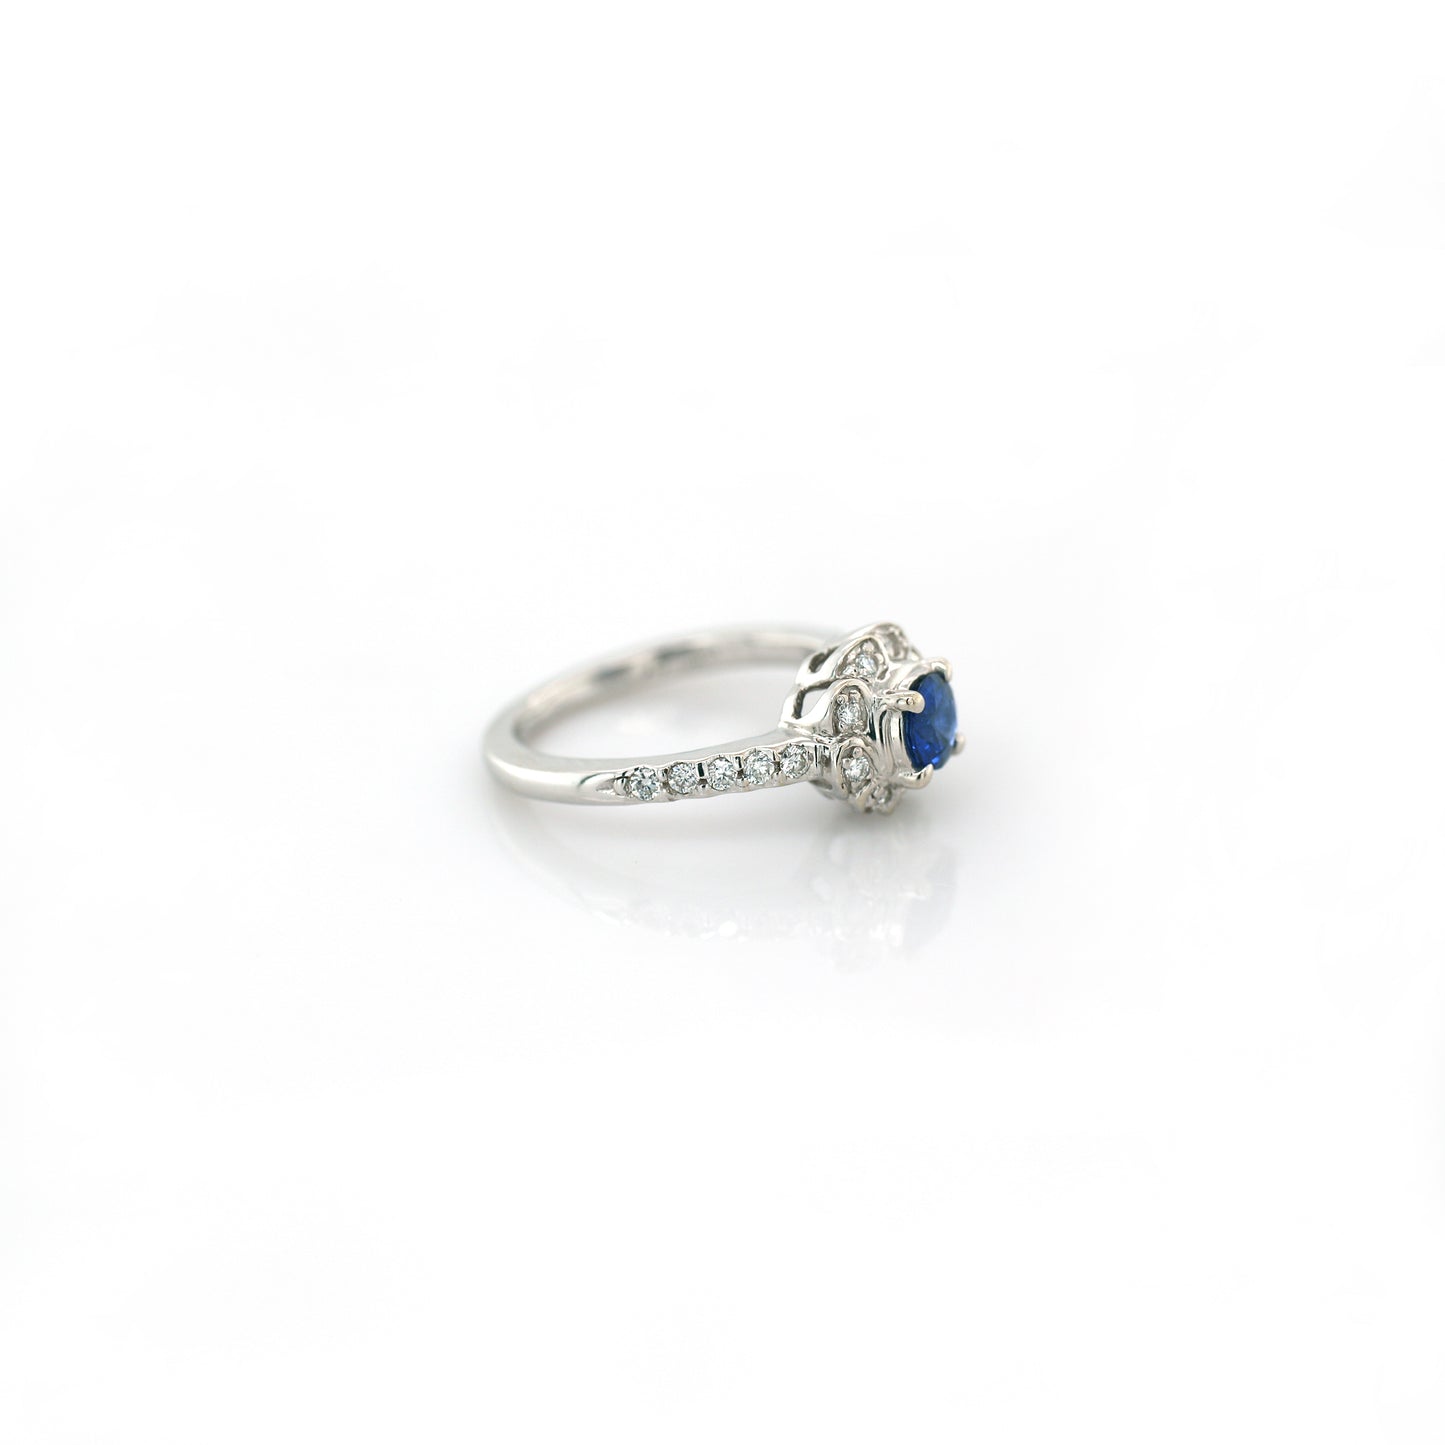 Blue Sapphire & Diamond Ring - 18K White Gold  3.67gm